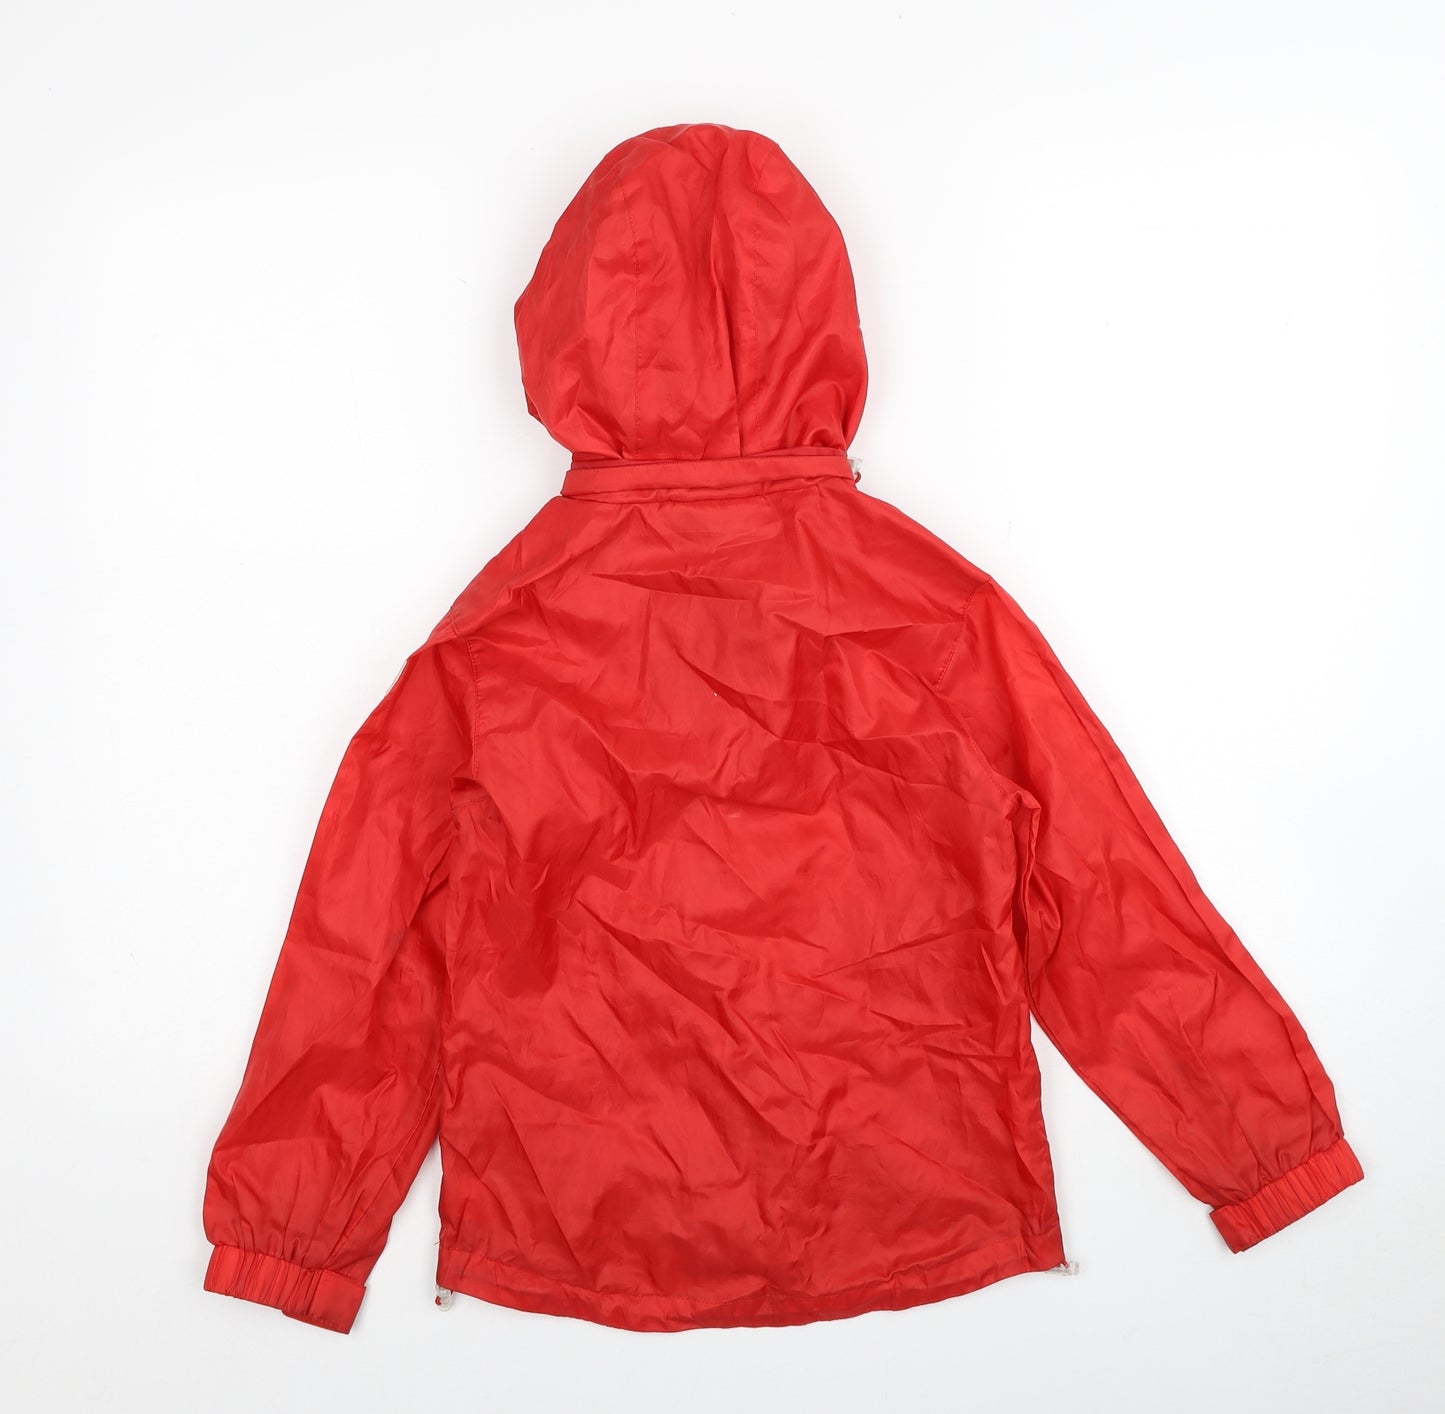 Hugaria Boys Red Rain Coat Jacket Size 8 Years Pullover